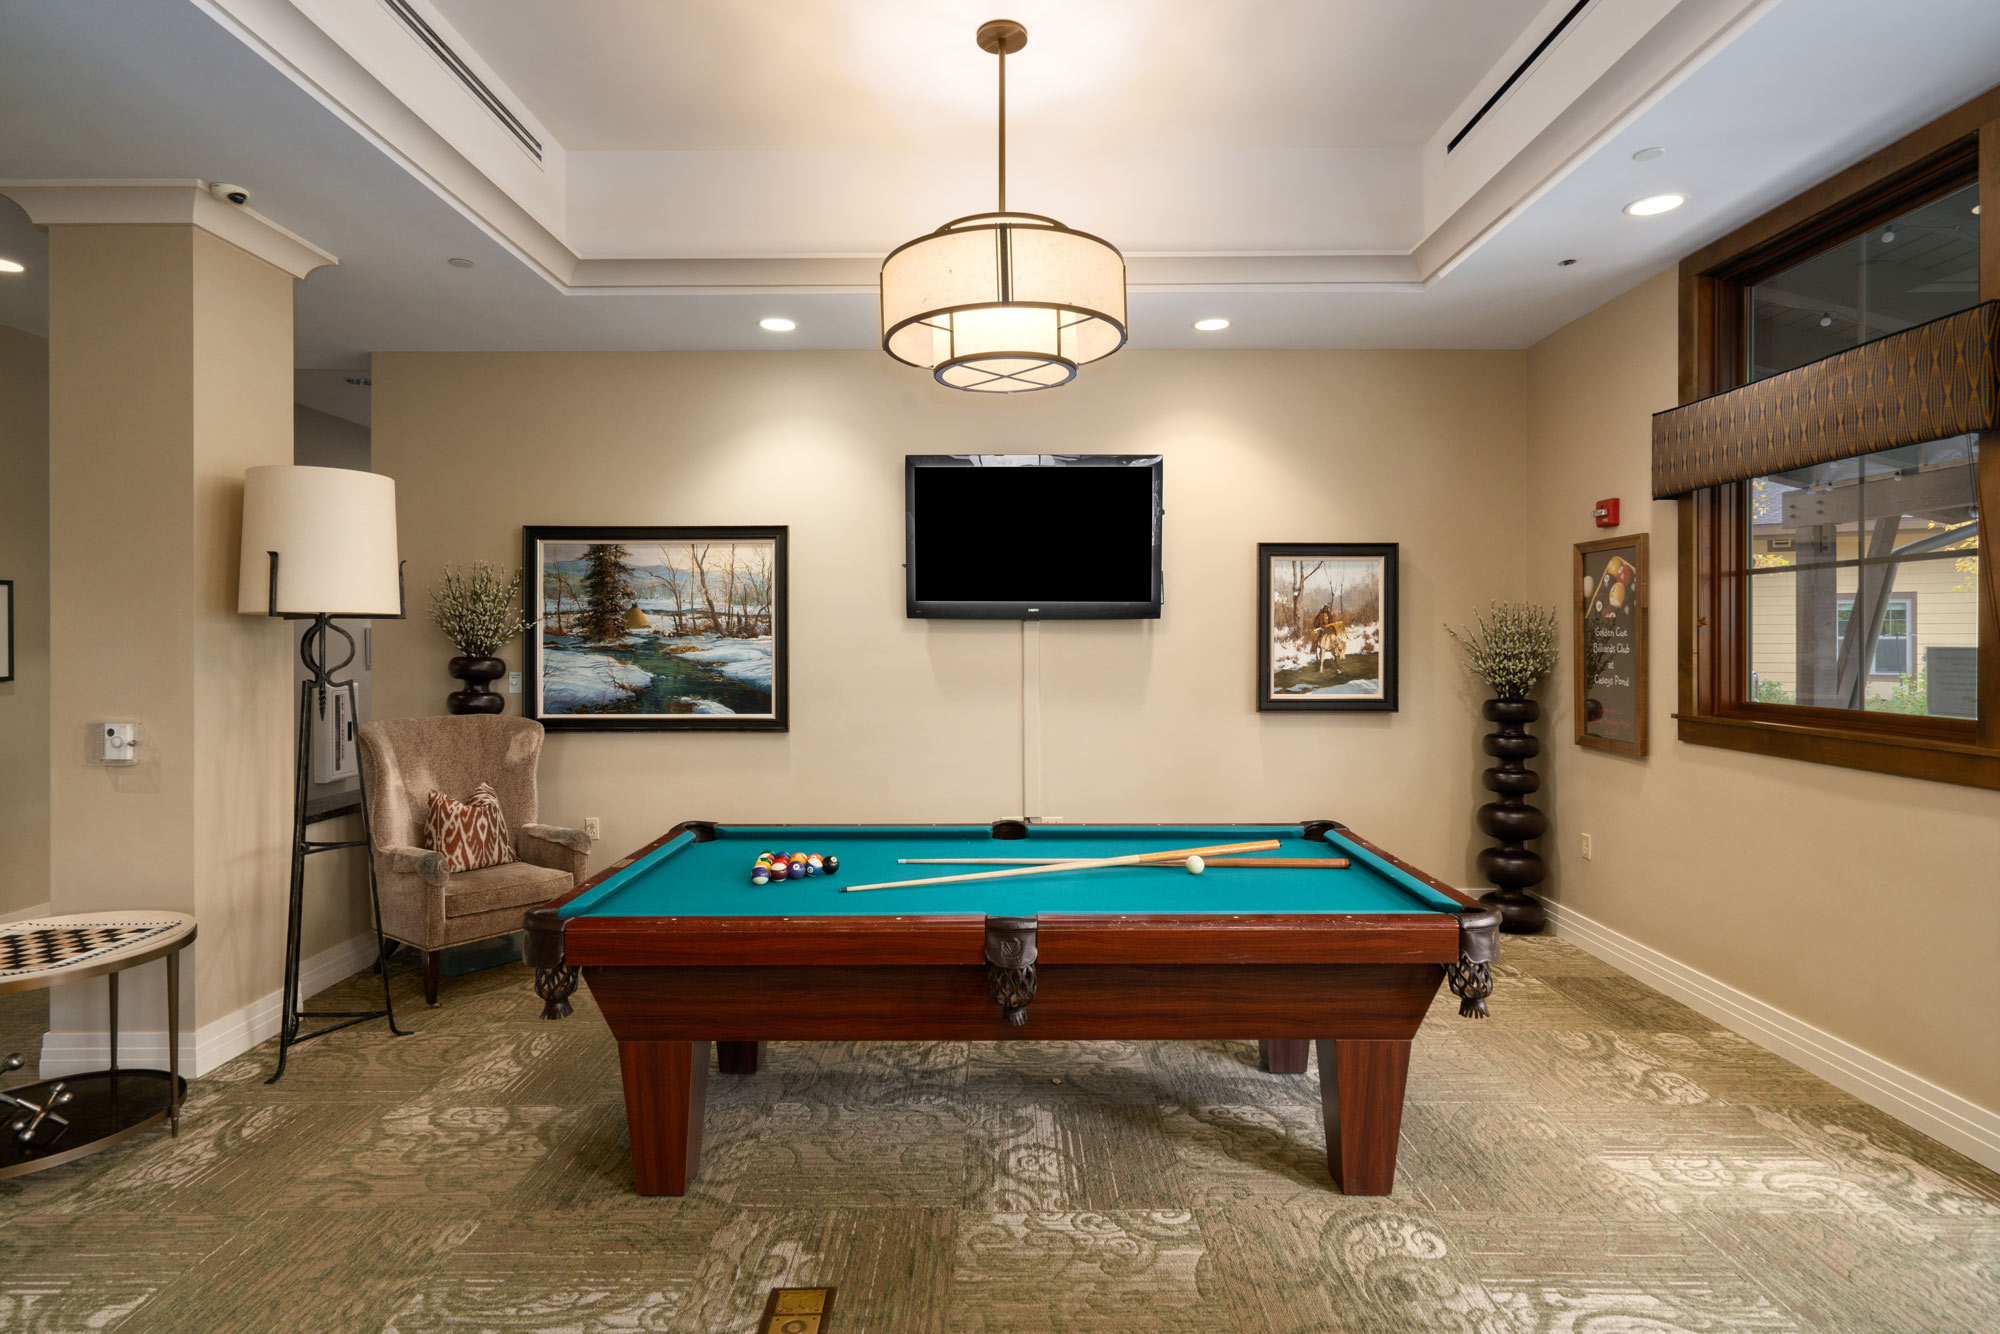 Senior Living Pool Table and Game Room